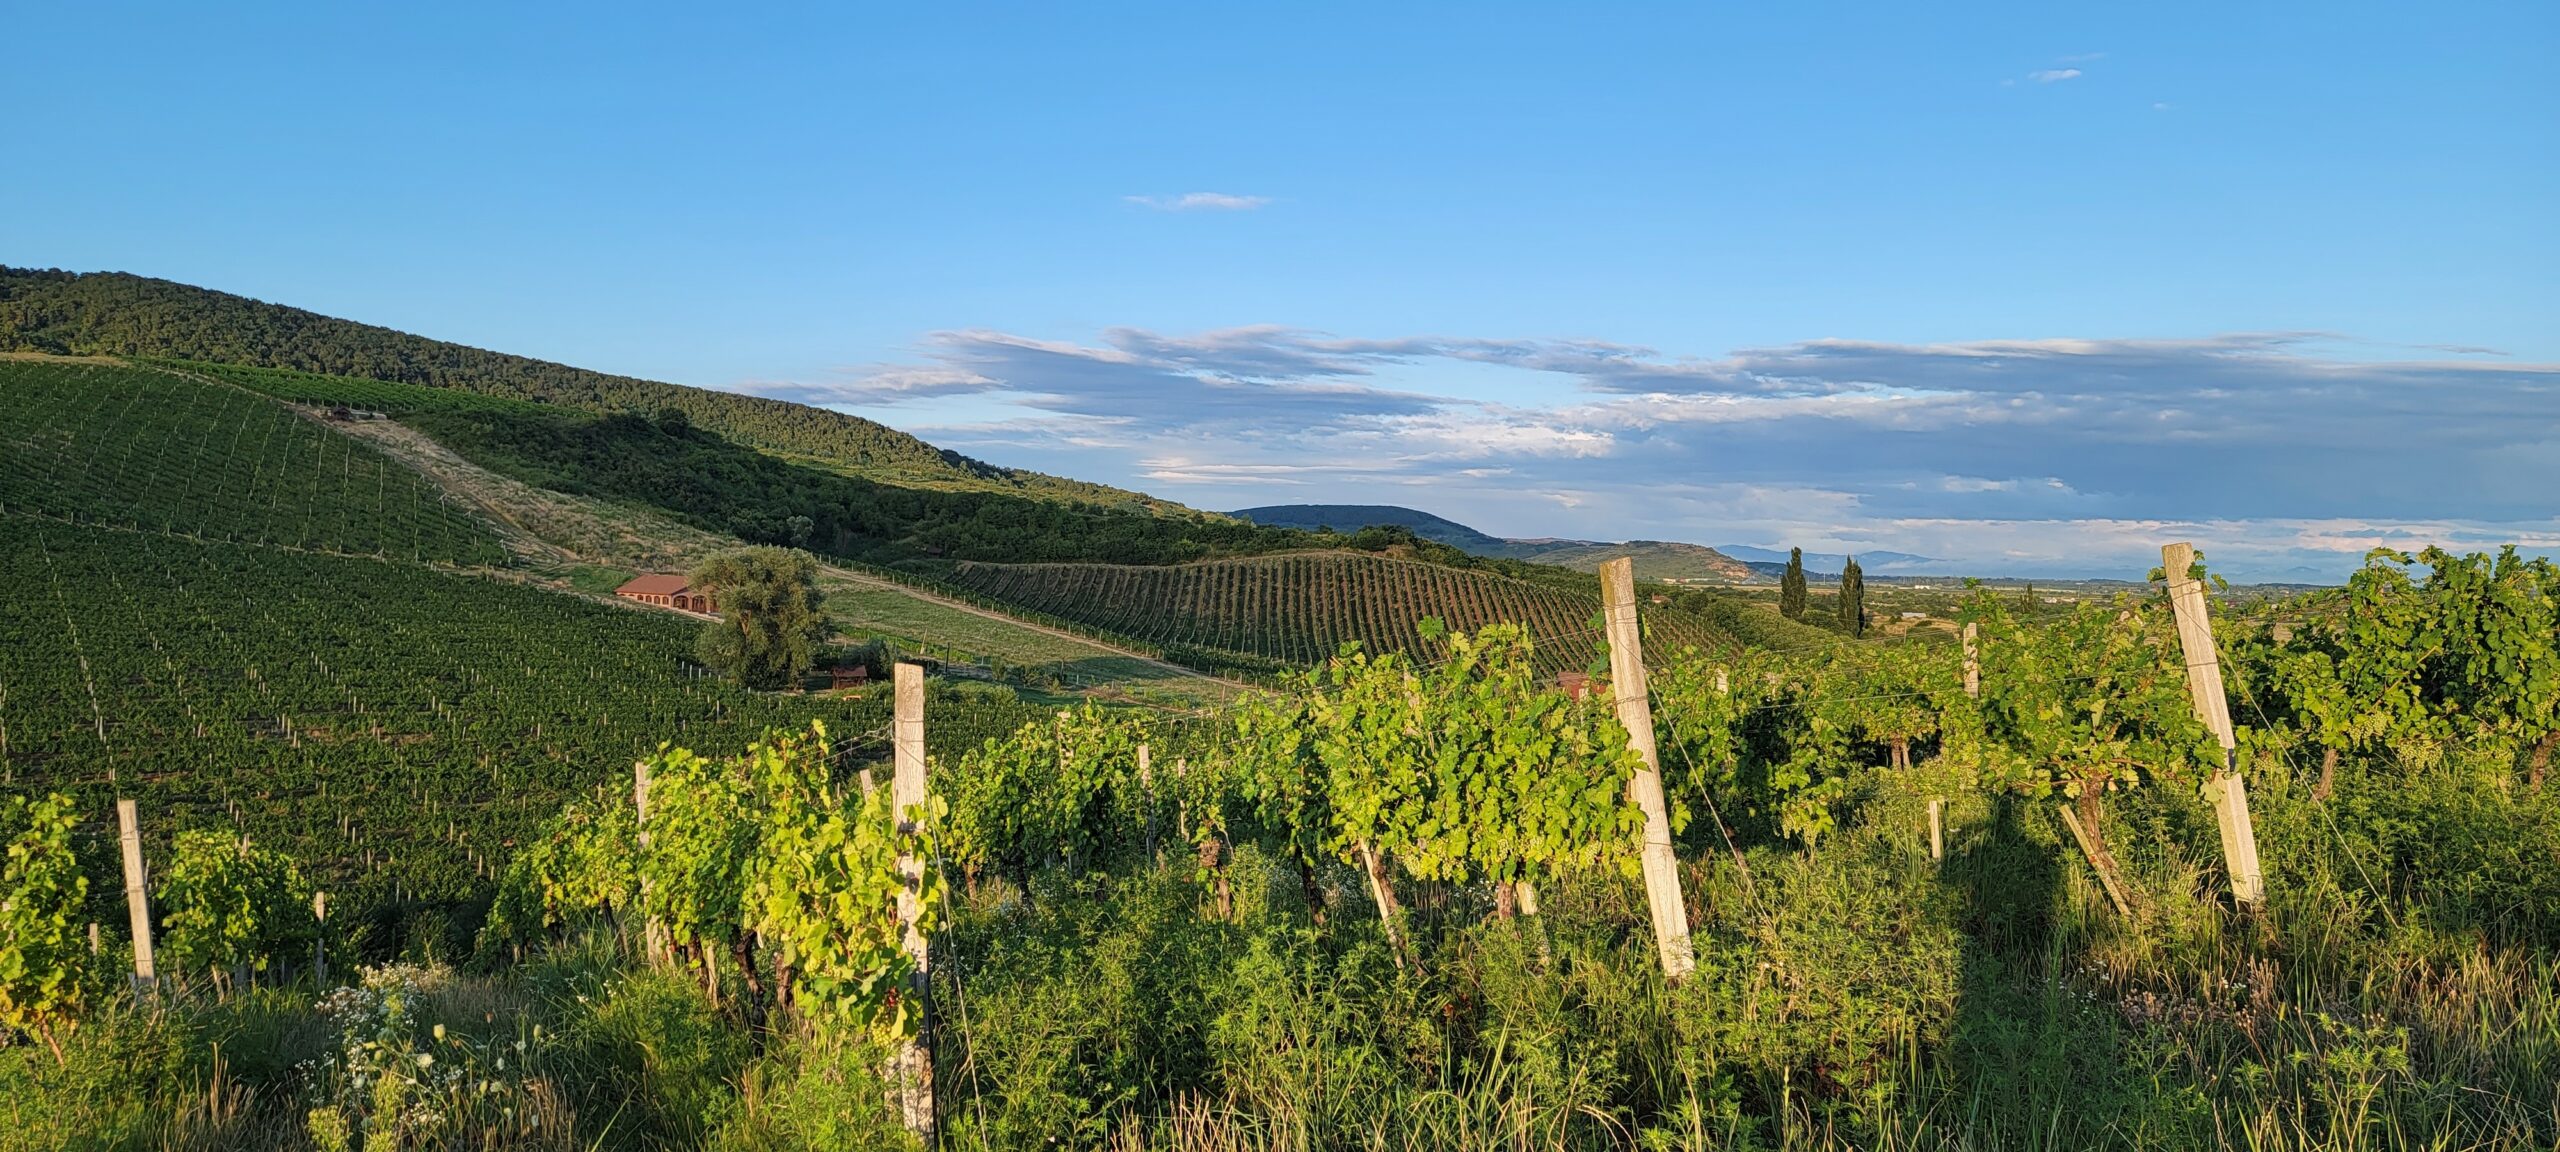 Large vineyards of the Rias Baixas region